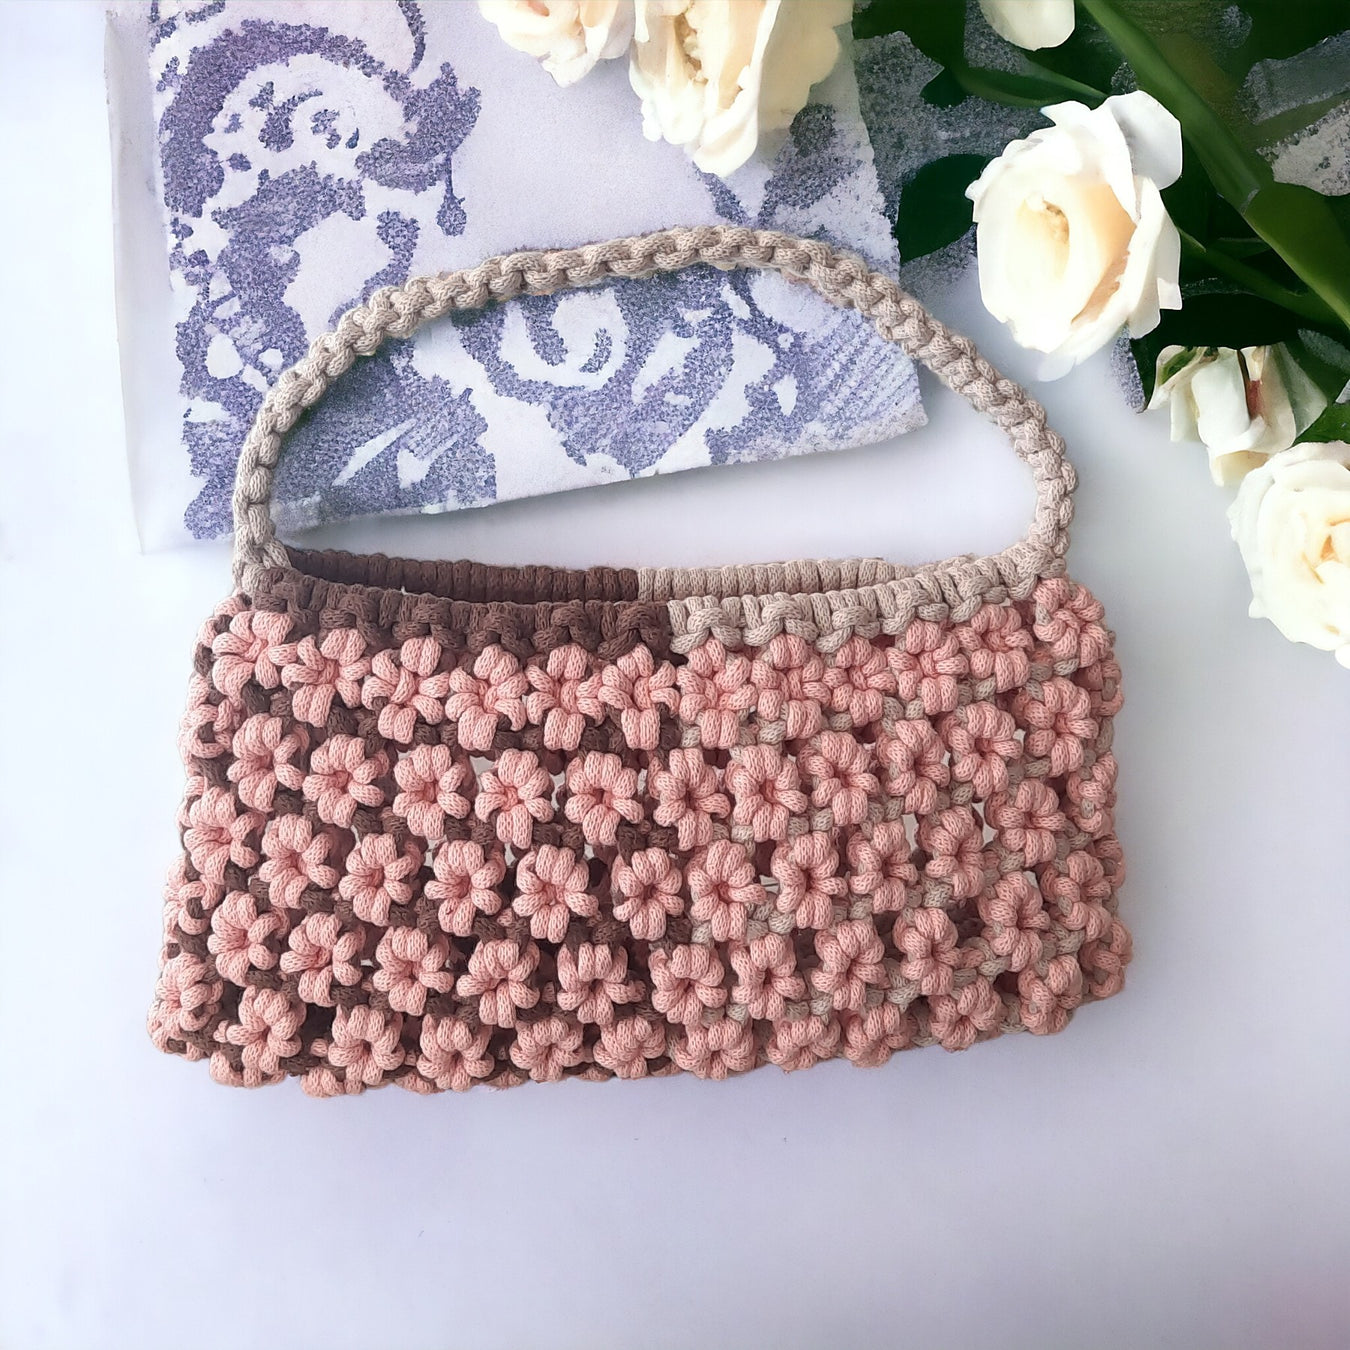 Macrame DIY Coquette style handbag beige, brown, salmon pink from decodeb